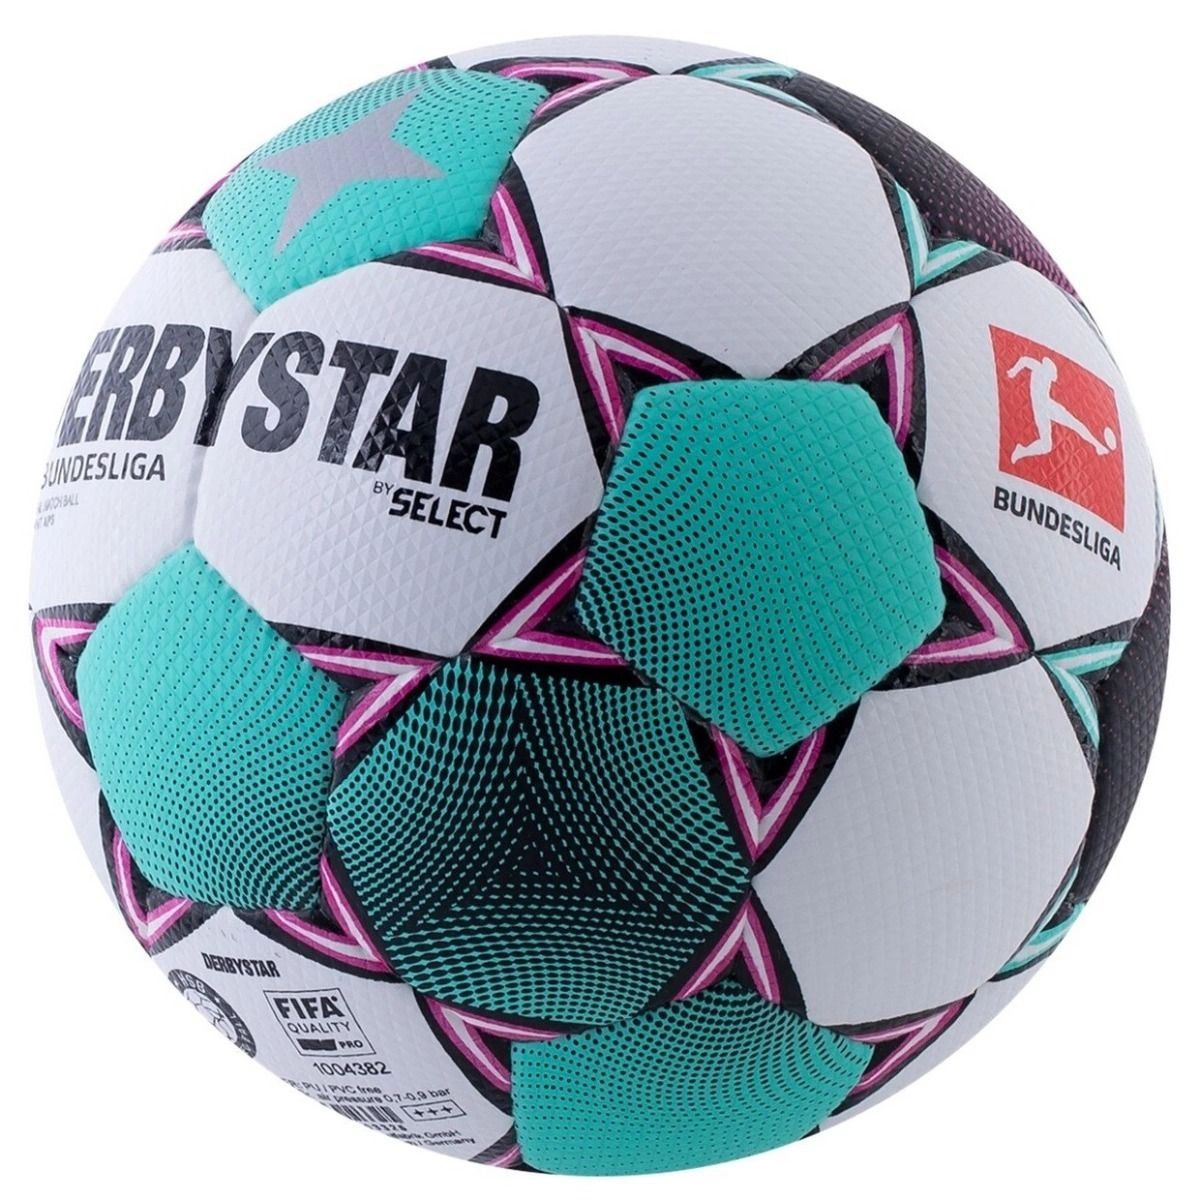 Select 2020-21 DERBYSTAR Bundesliga Official Match Ball - White-Teal-Pink